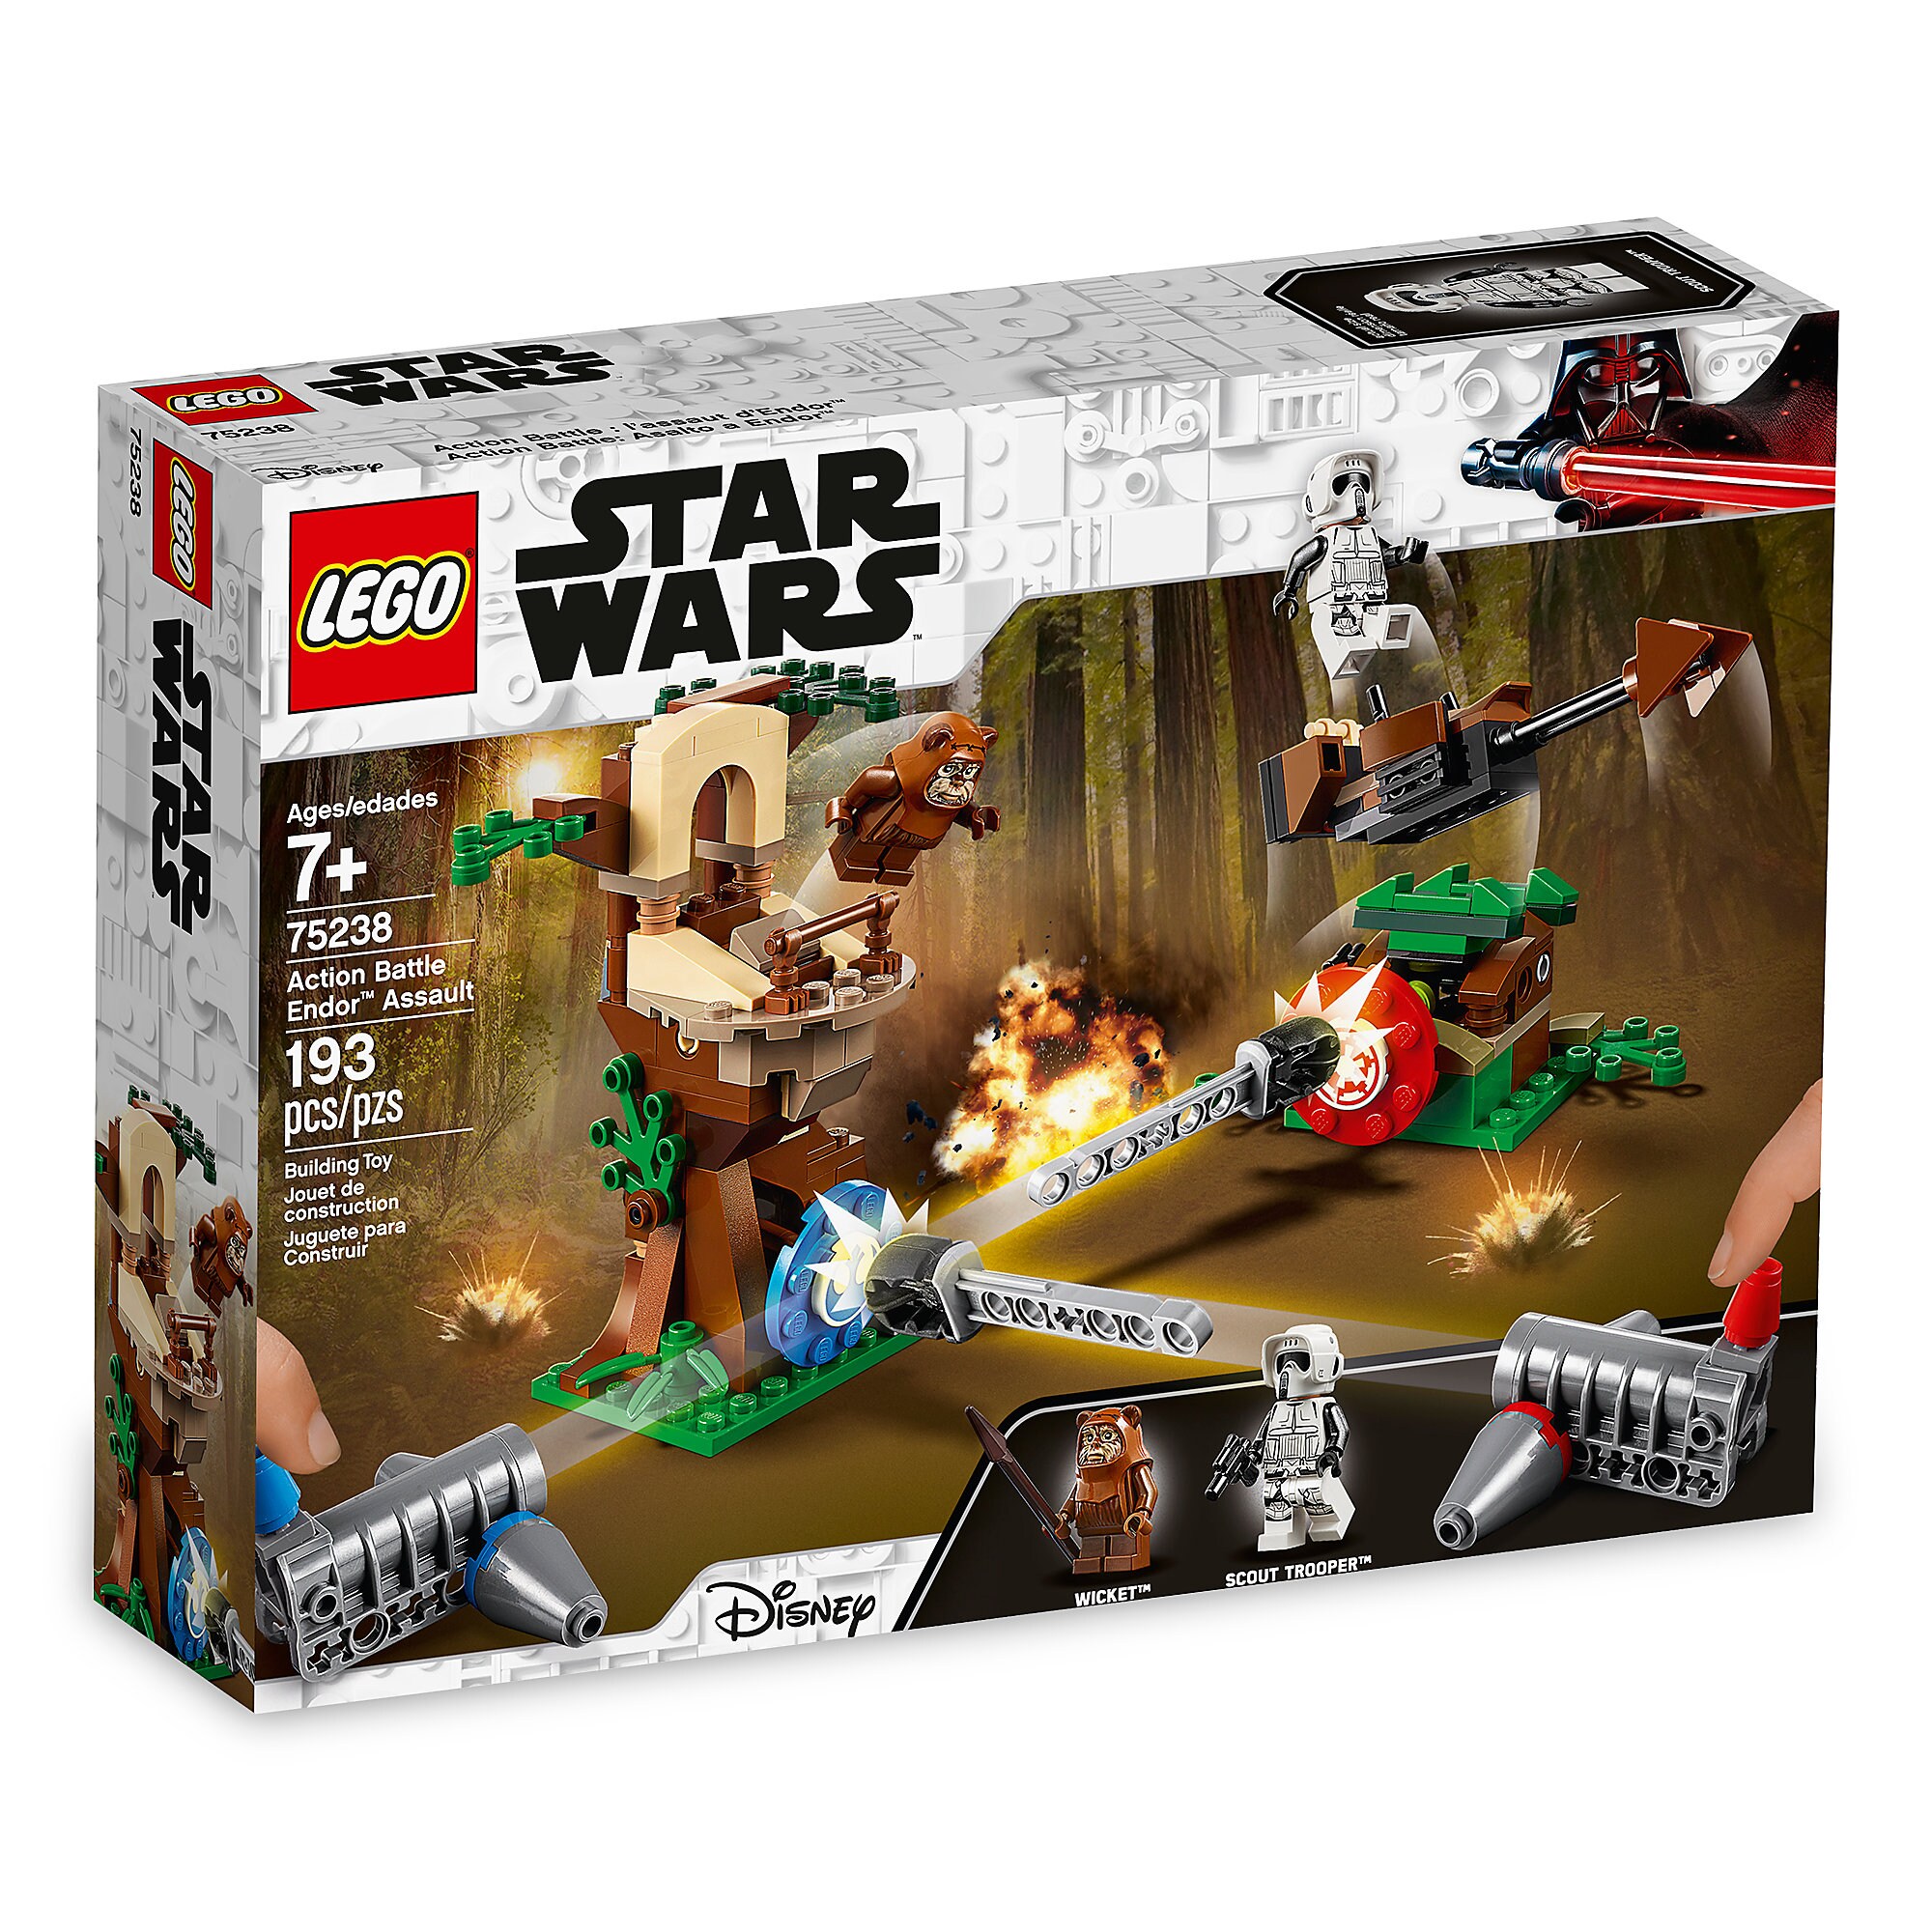 Action Battle Endor Assault Play Set by LEGO - Star Wars